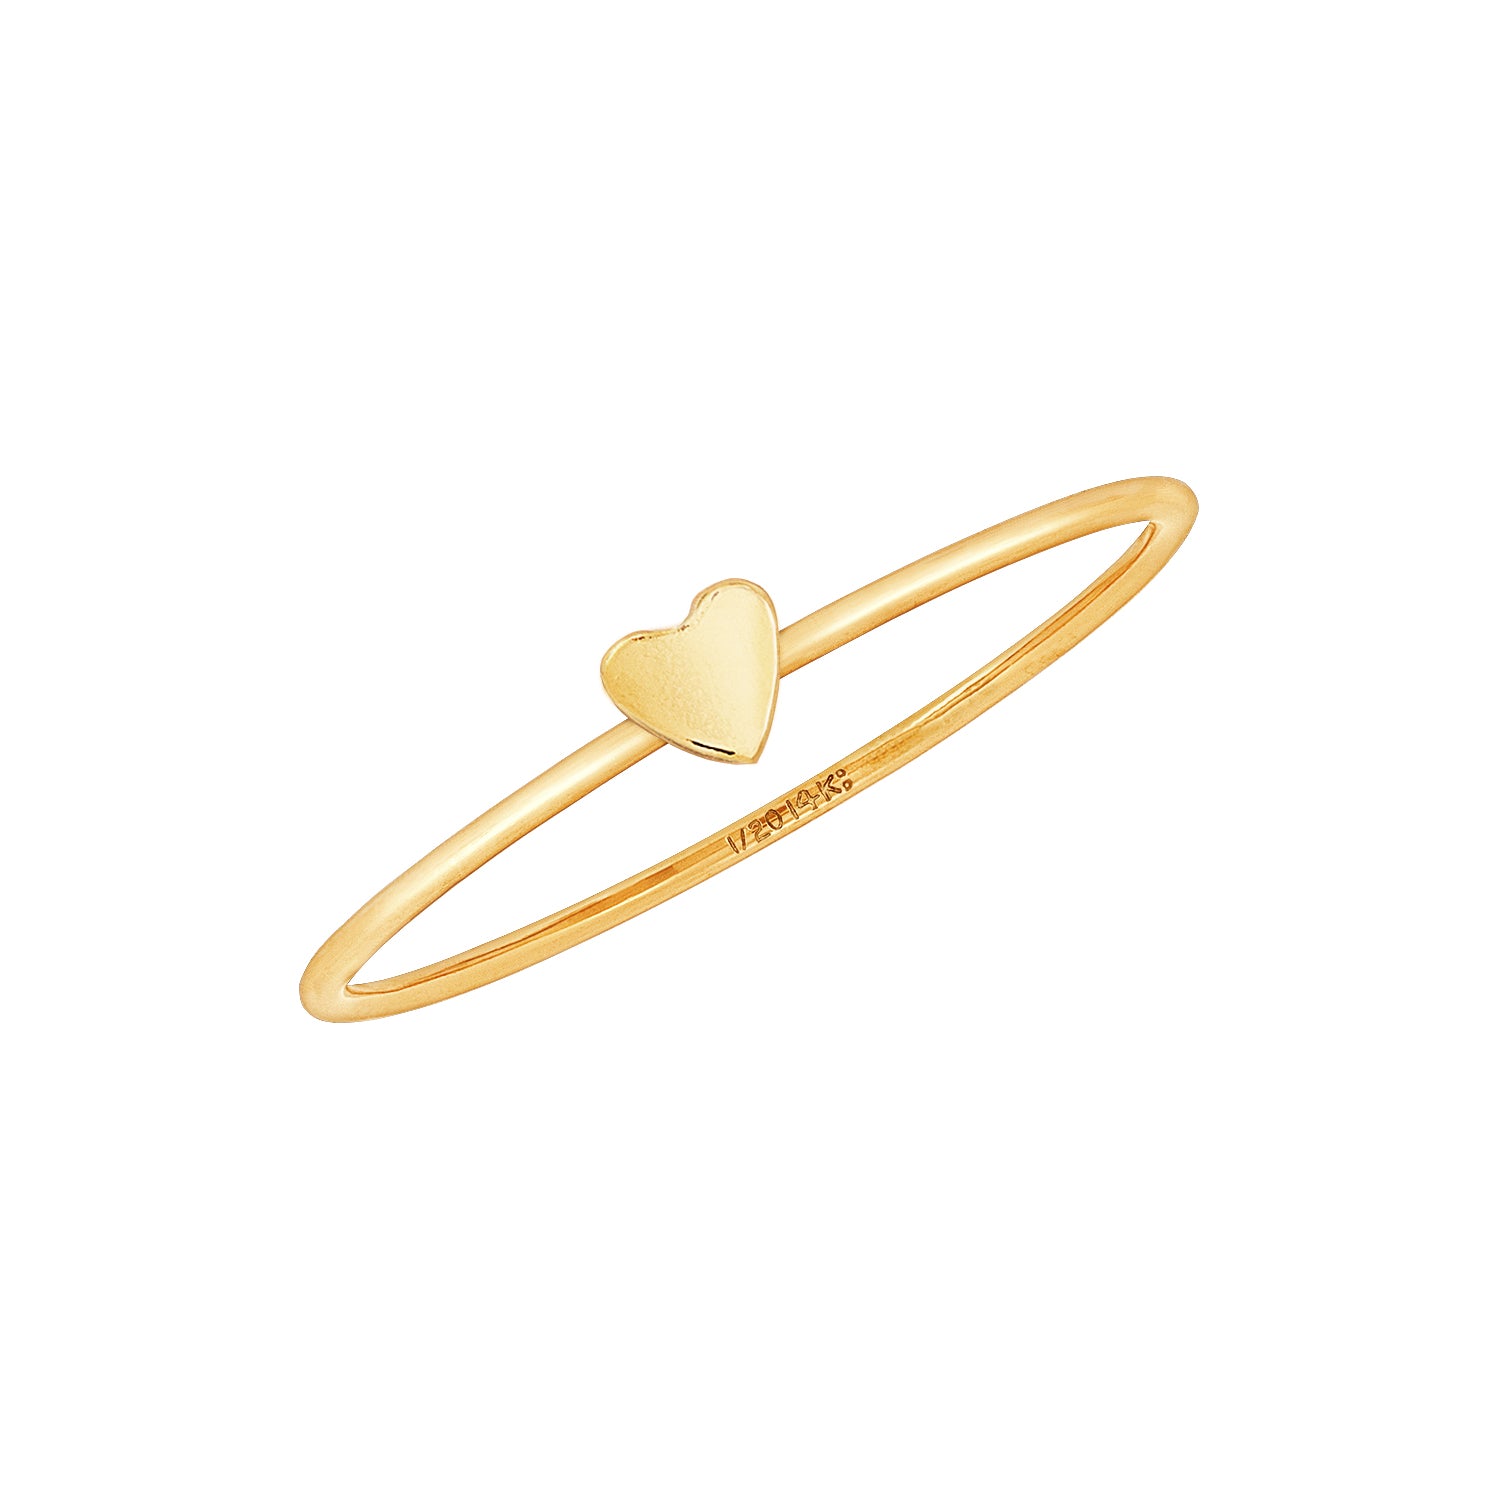 Distinct Bright Lightning 22k Gold Ring | Yellow white gold ring, White gold  rings, 22k gold ring